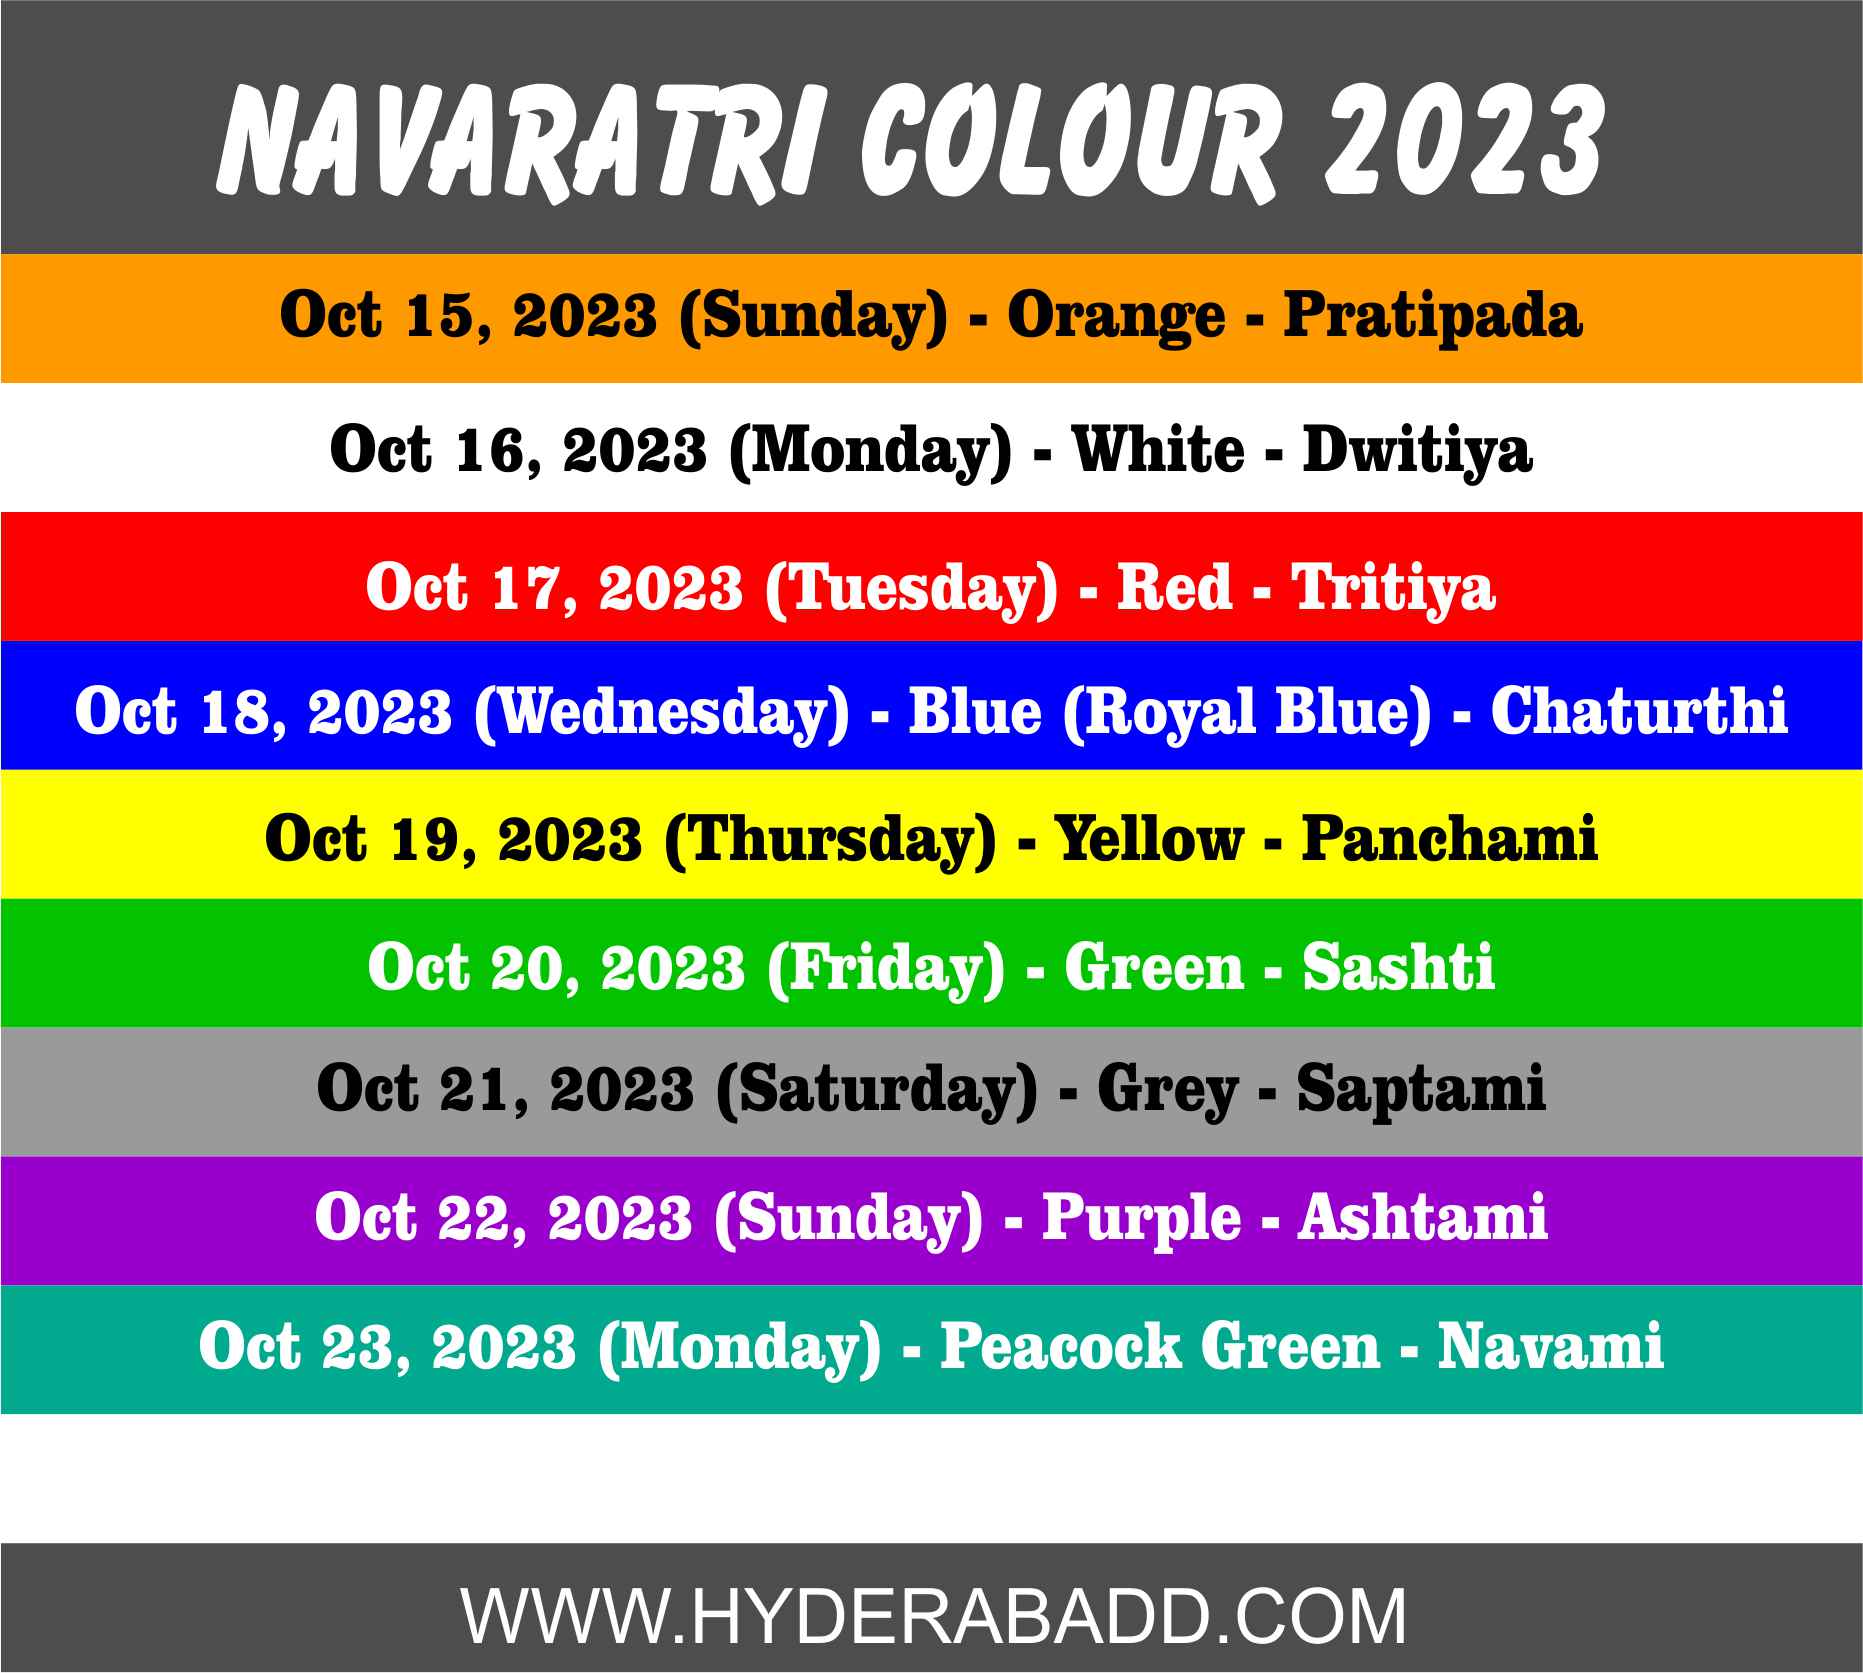 Colour of Navratri